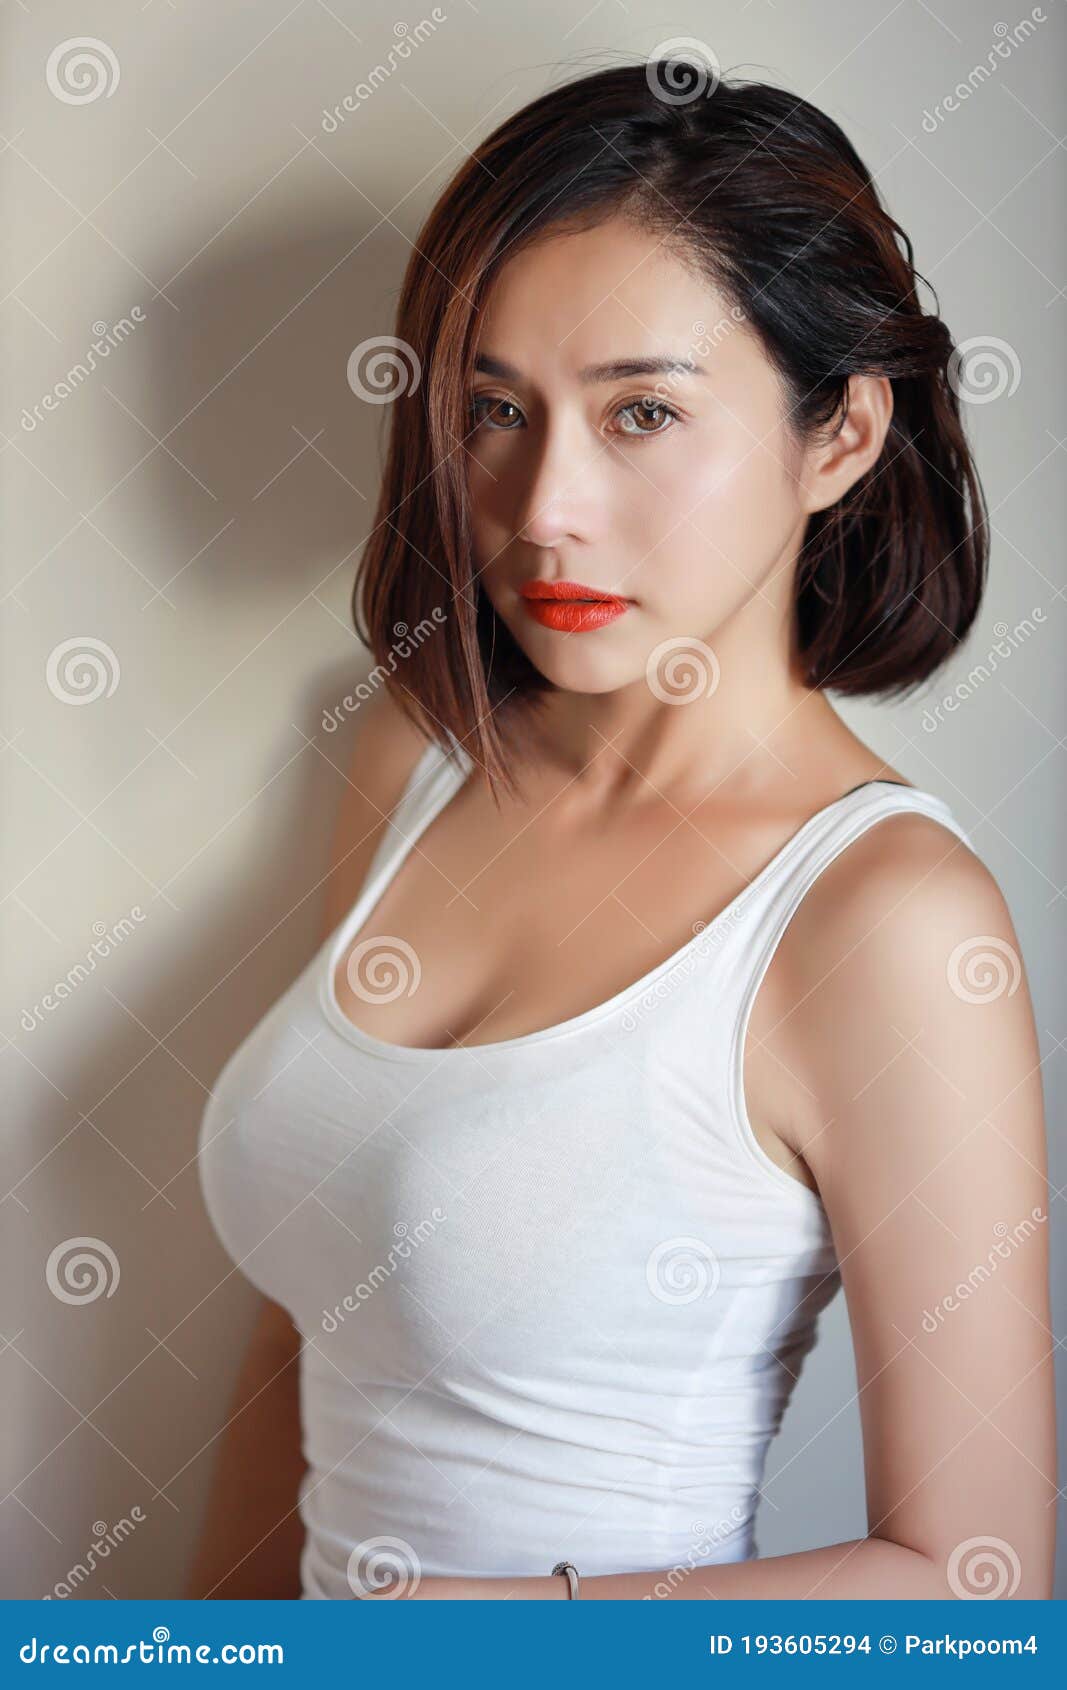 Asian women images